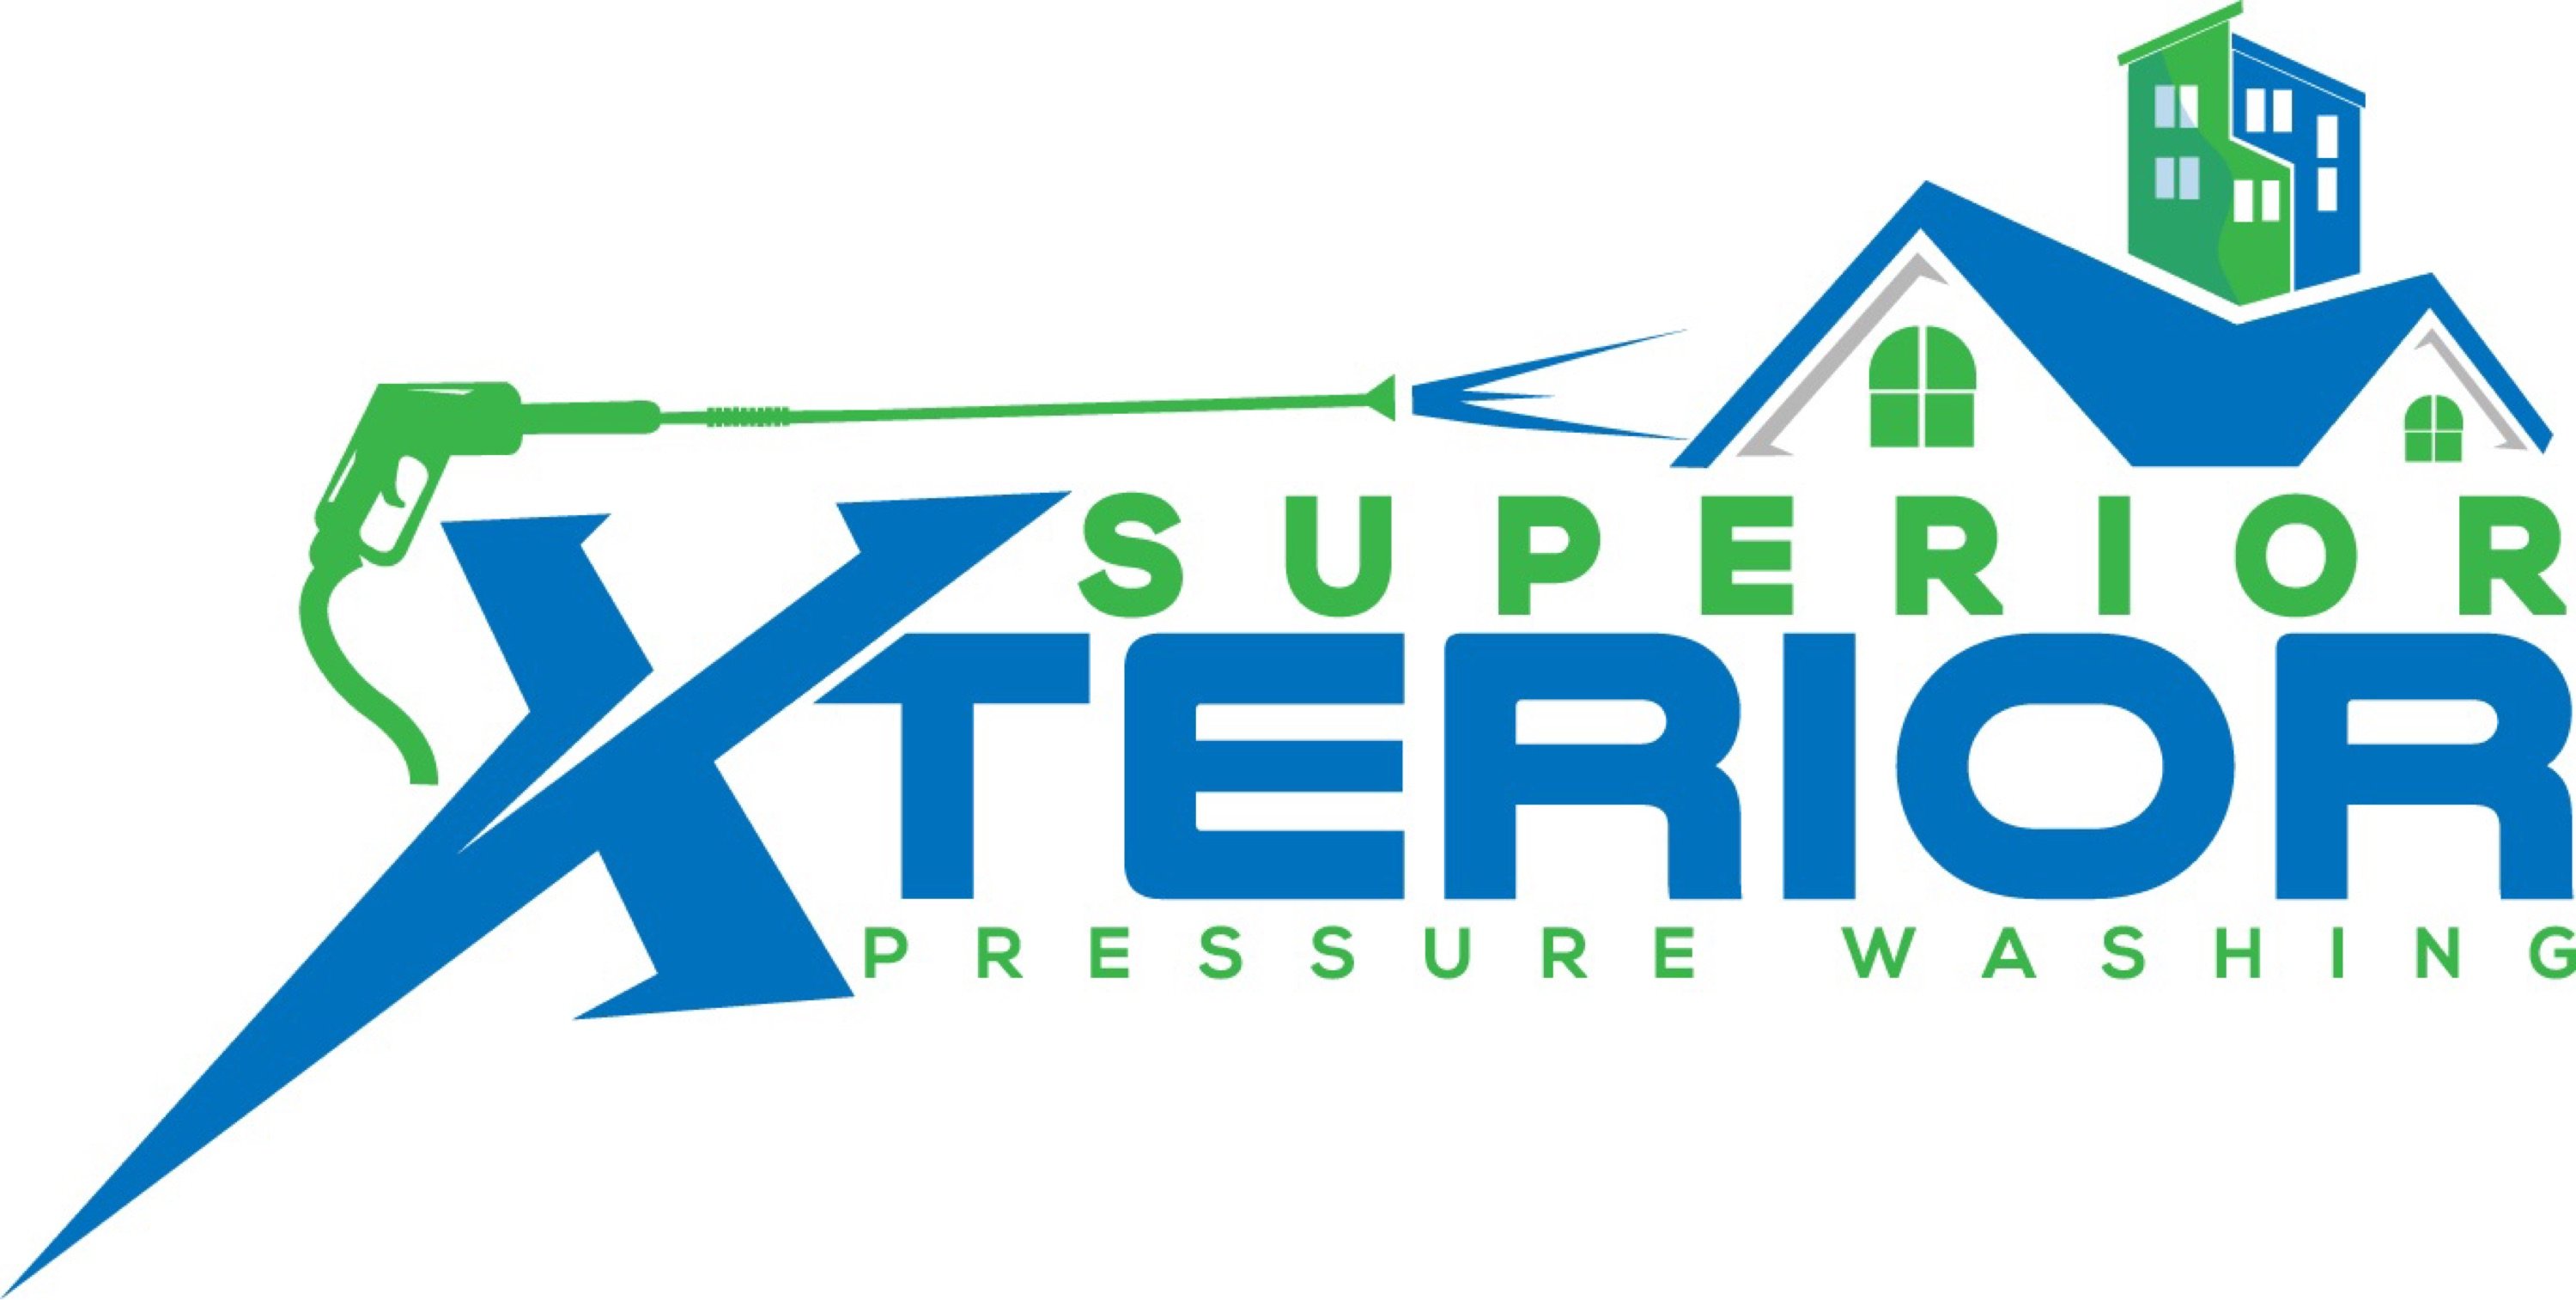 Superior Xterior Pressure Washing Logo